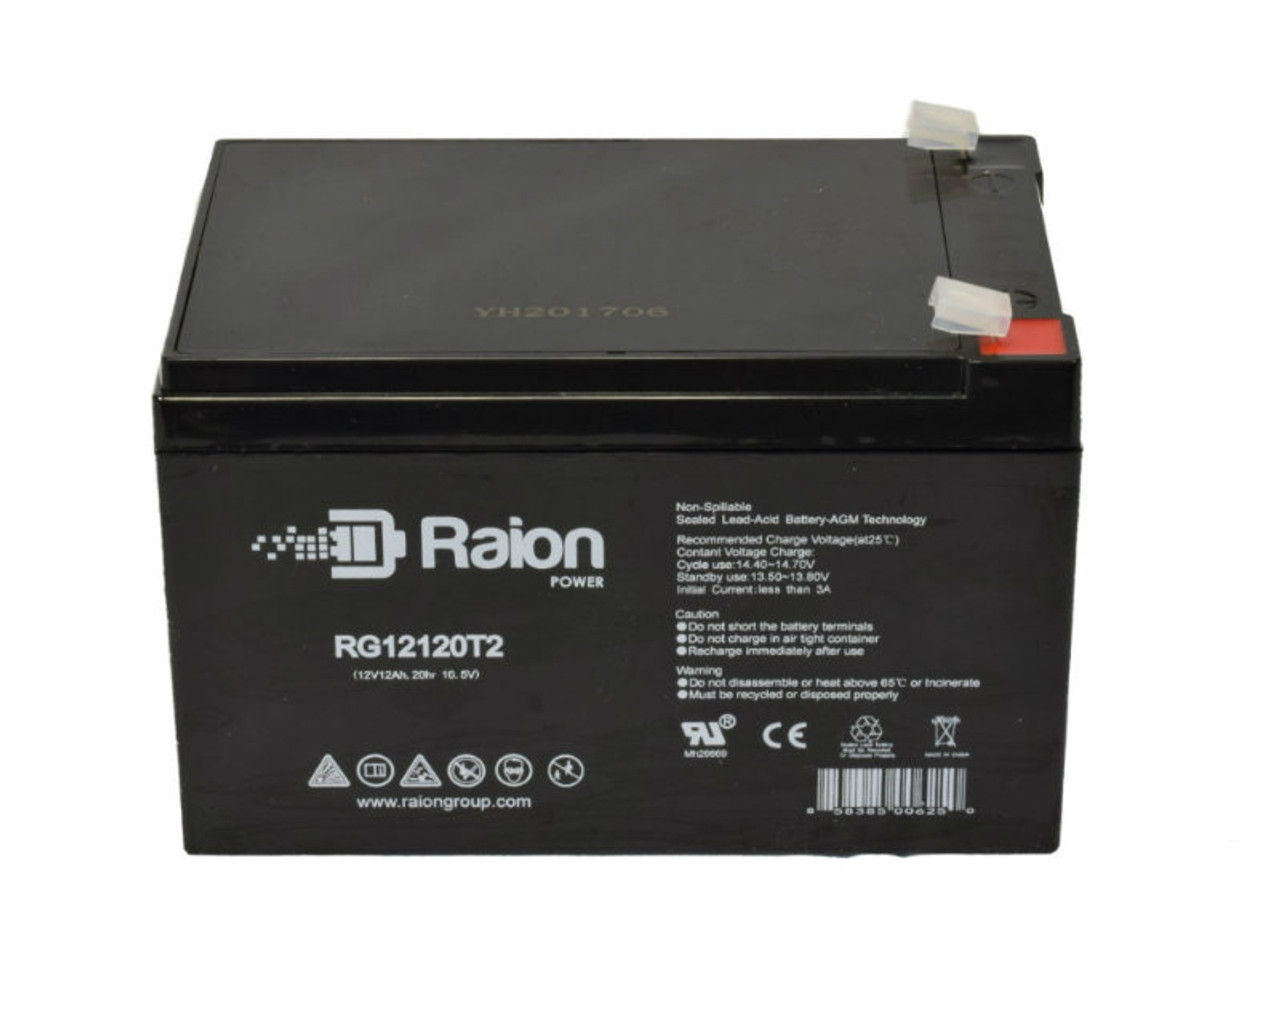 Raion Power RG12120T2 SLA Battery for Rascal MicroBalance 170 (2)